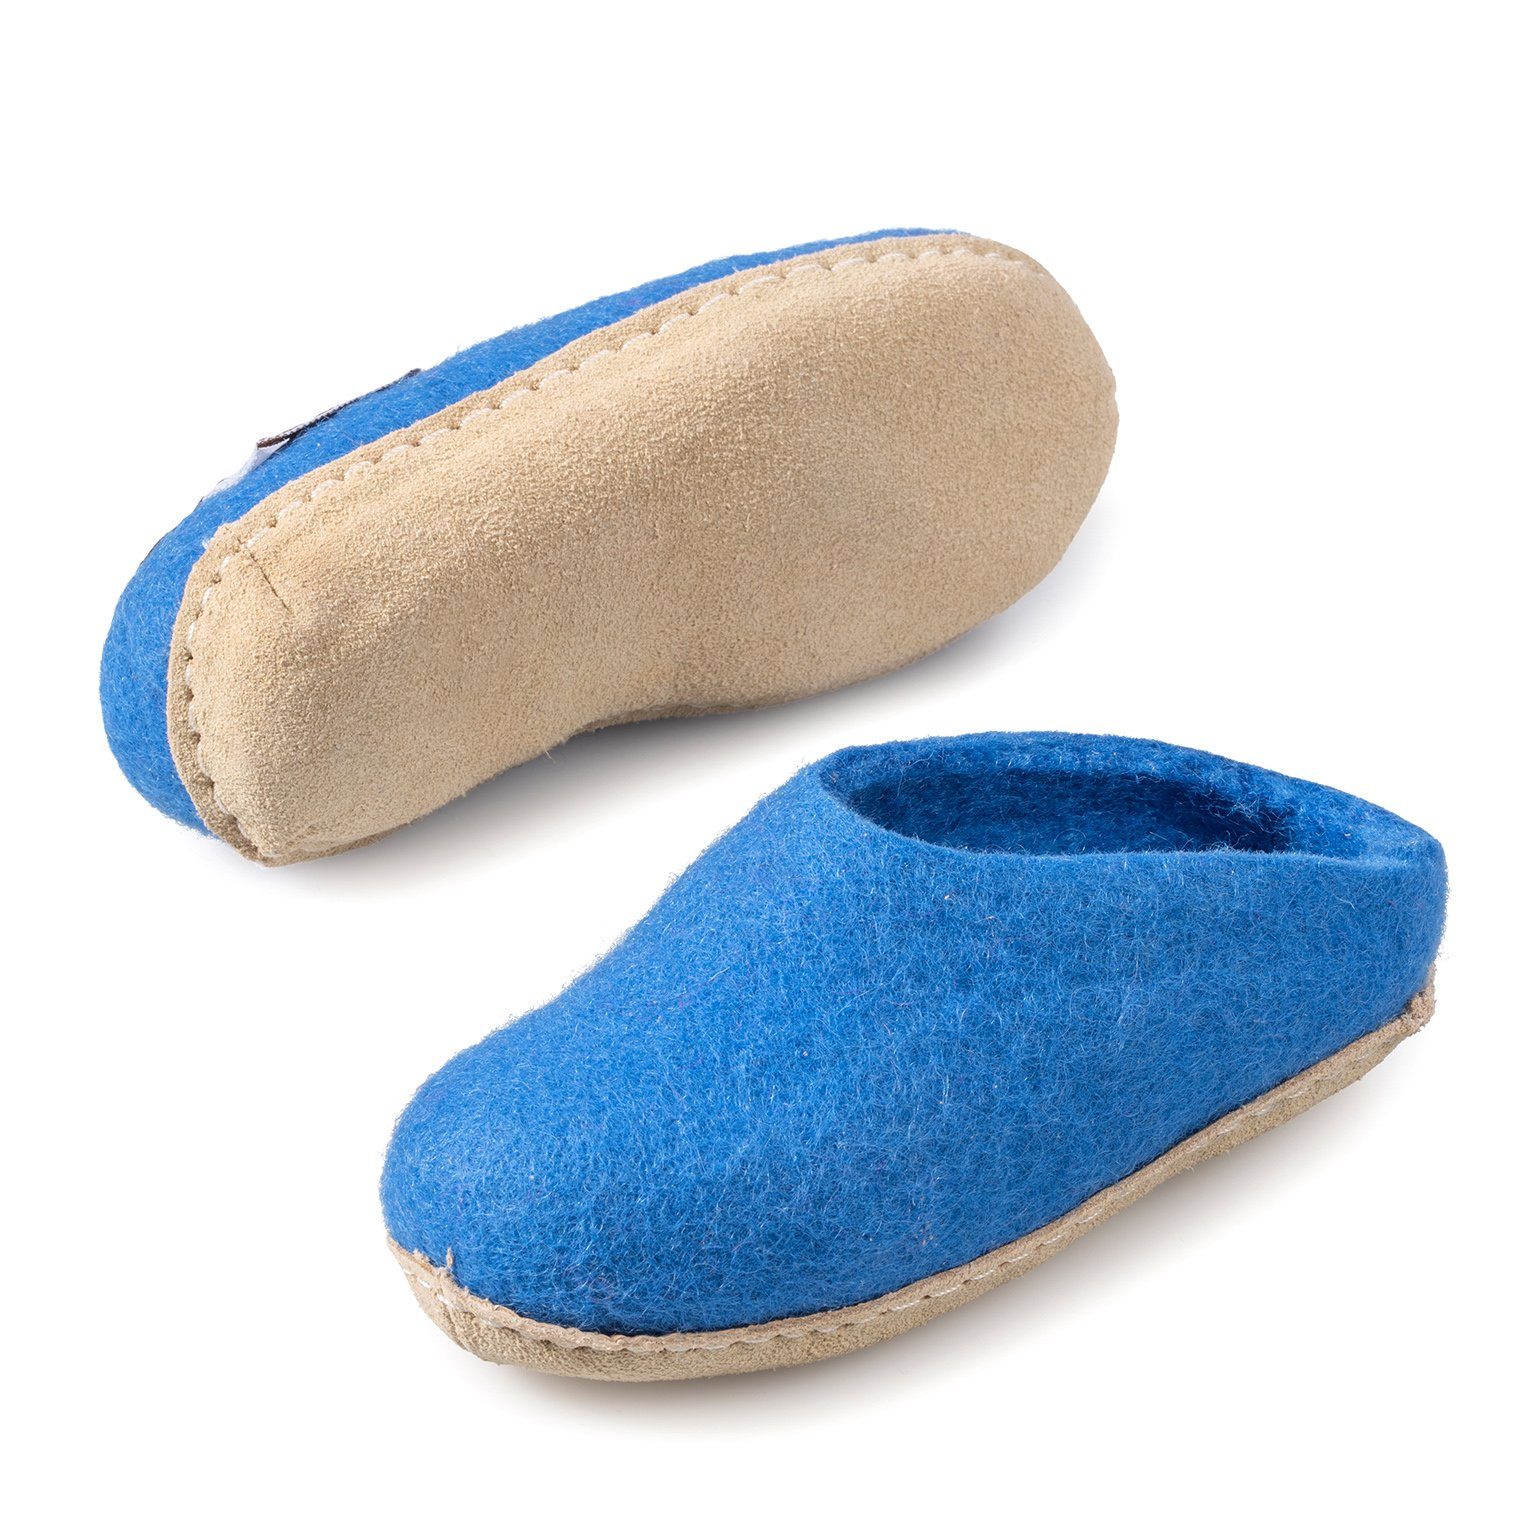 Filz Kinder Hausschuh leiser) Pantoffeln Blau Ledersohle (mit naturling